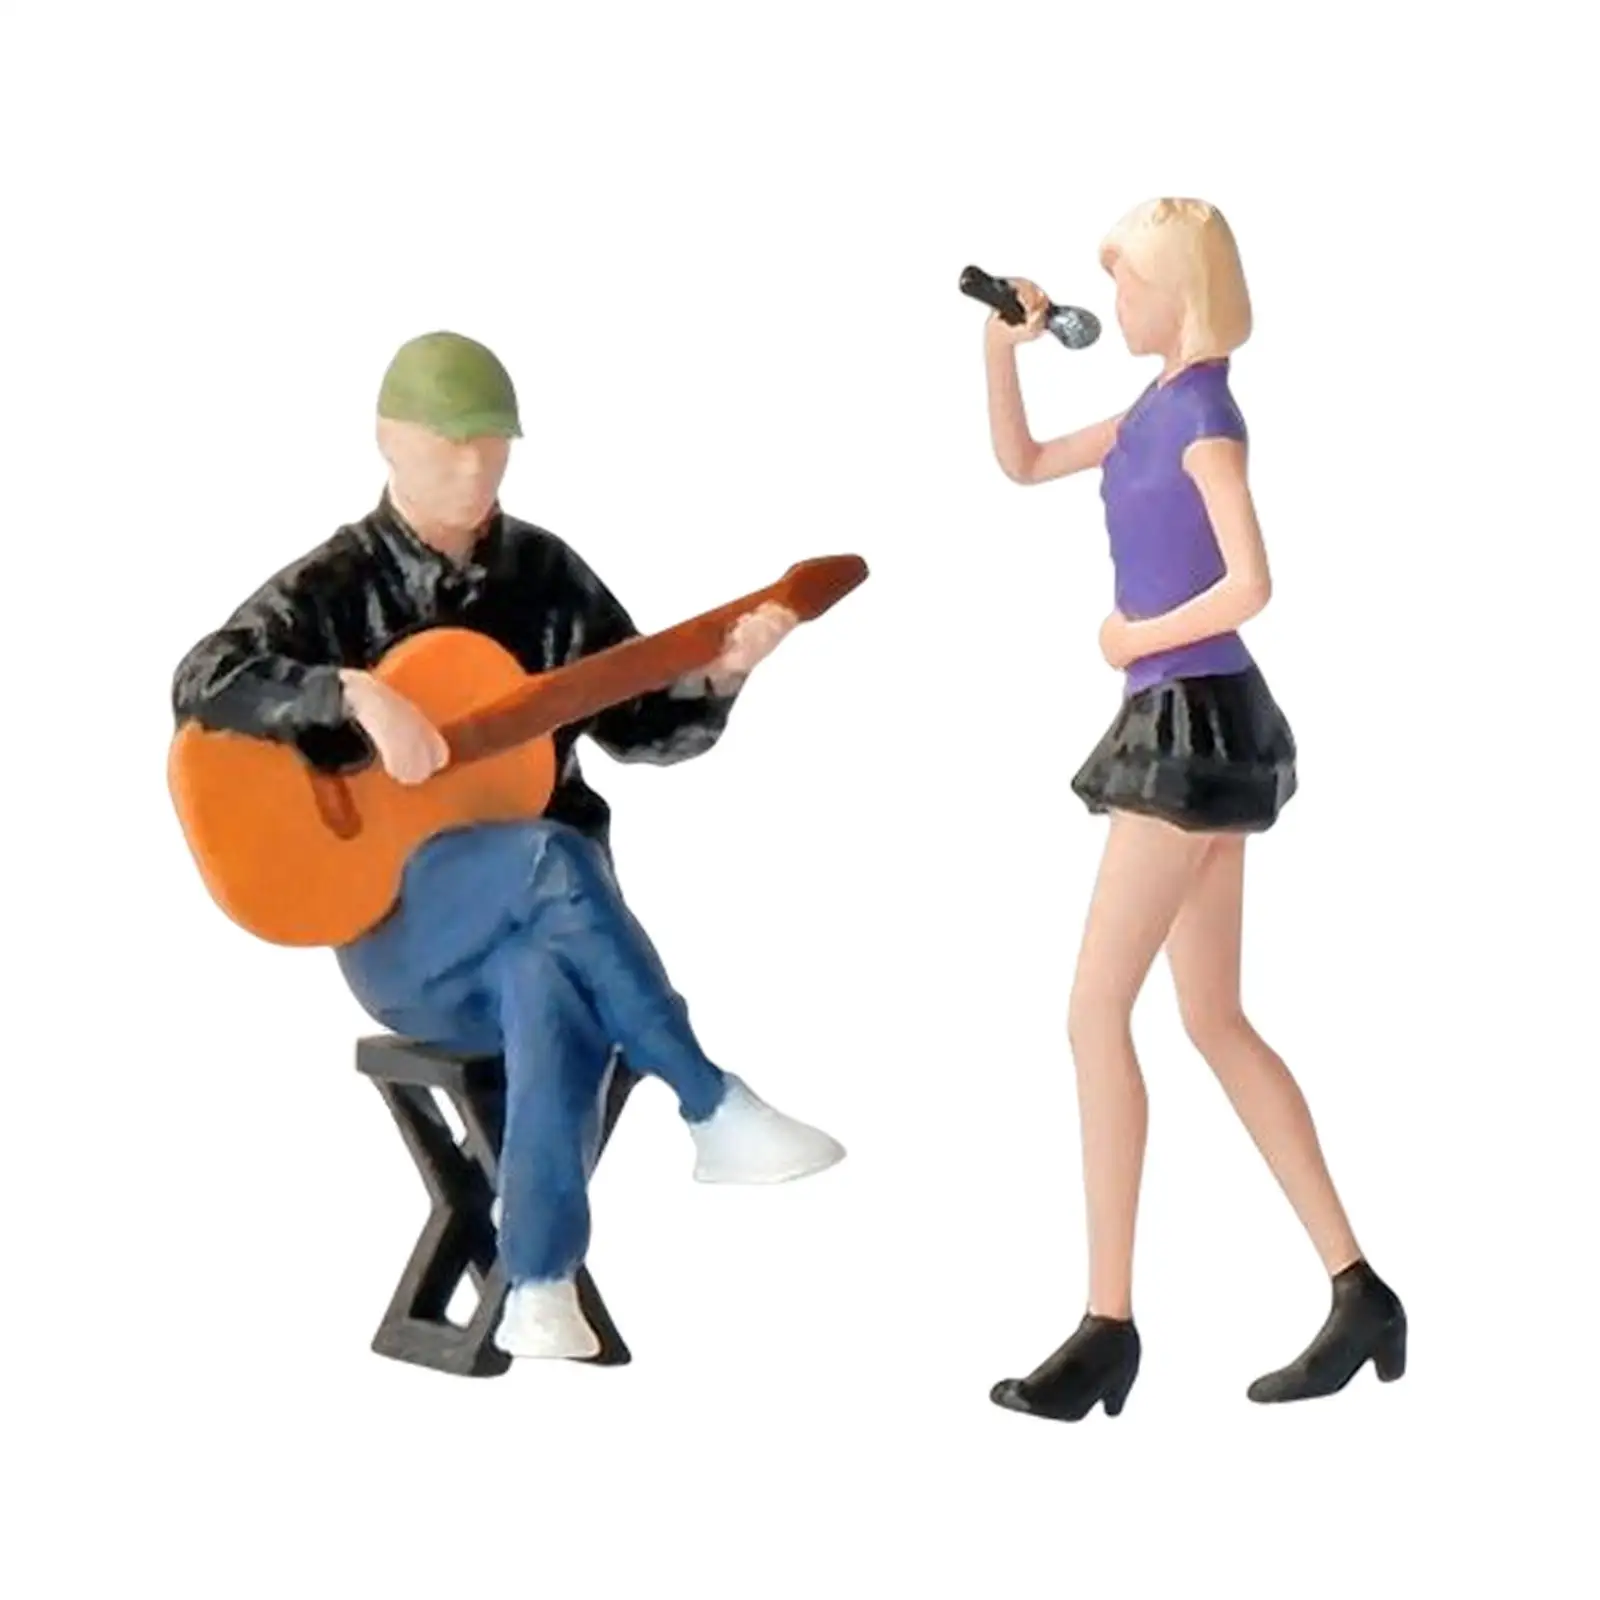 1:64 Guitarist and Singer Model Figures Desk Decoration People Figurines Diorama Miniature Realistic for Scenery Landscape Decor